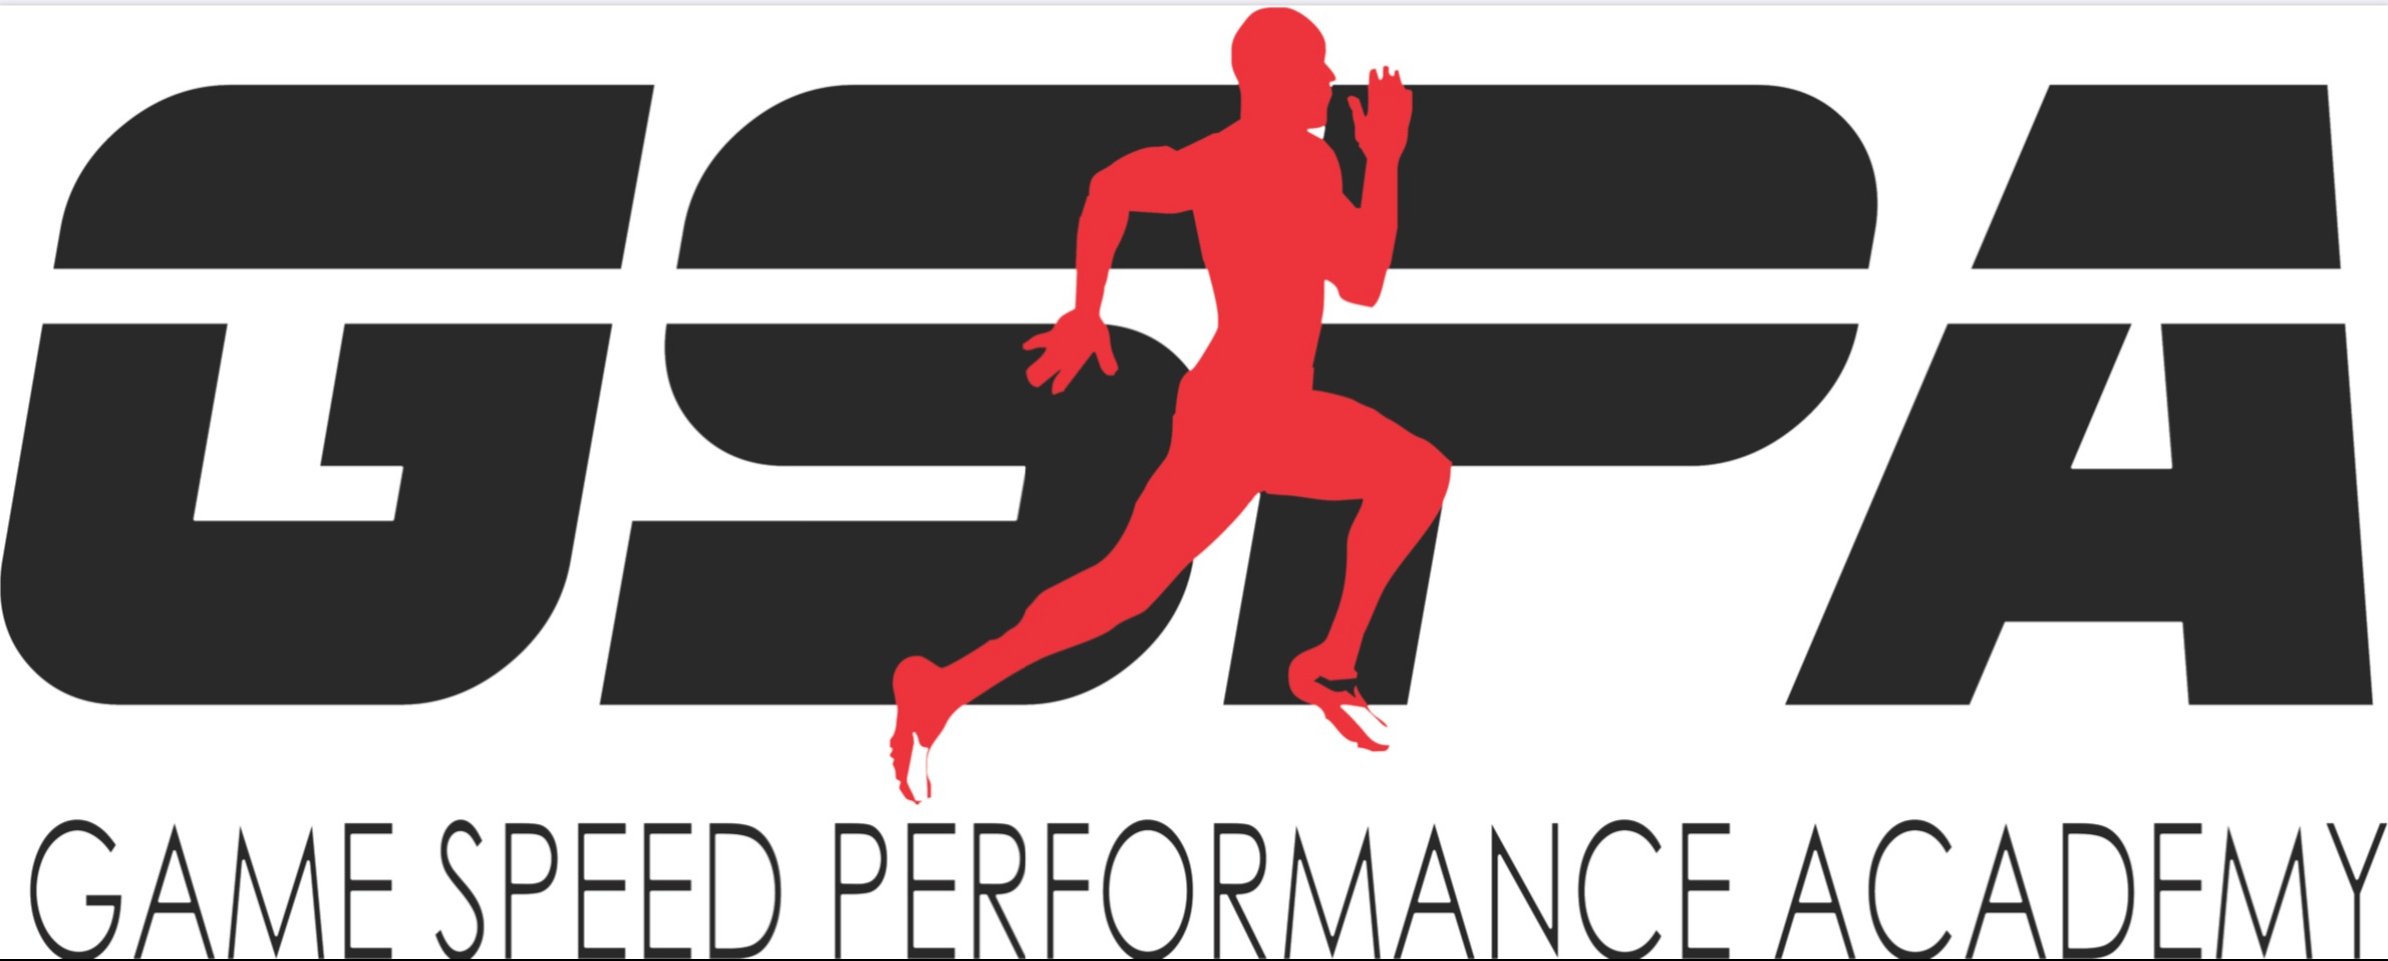 Game Speed Performance Academy logo